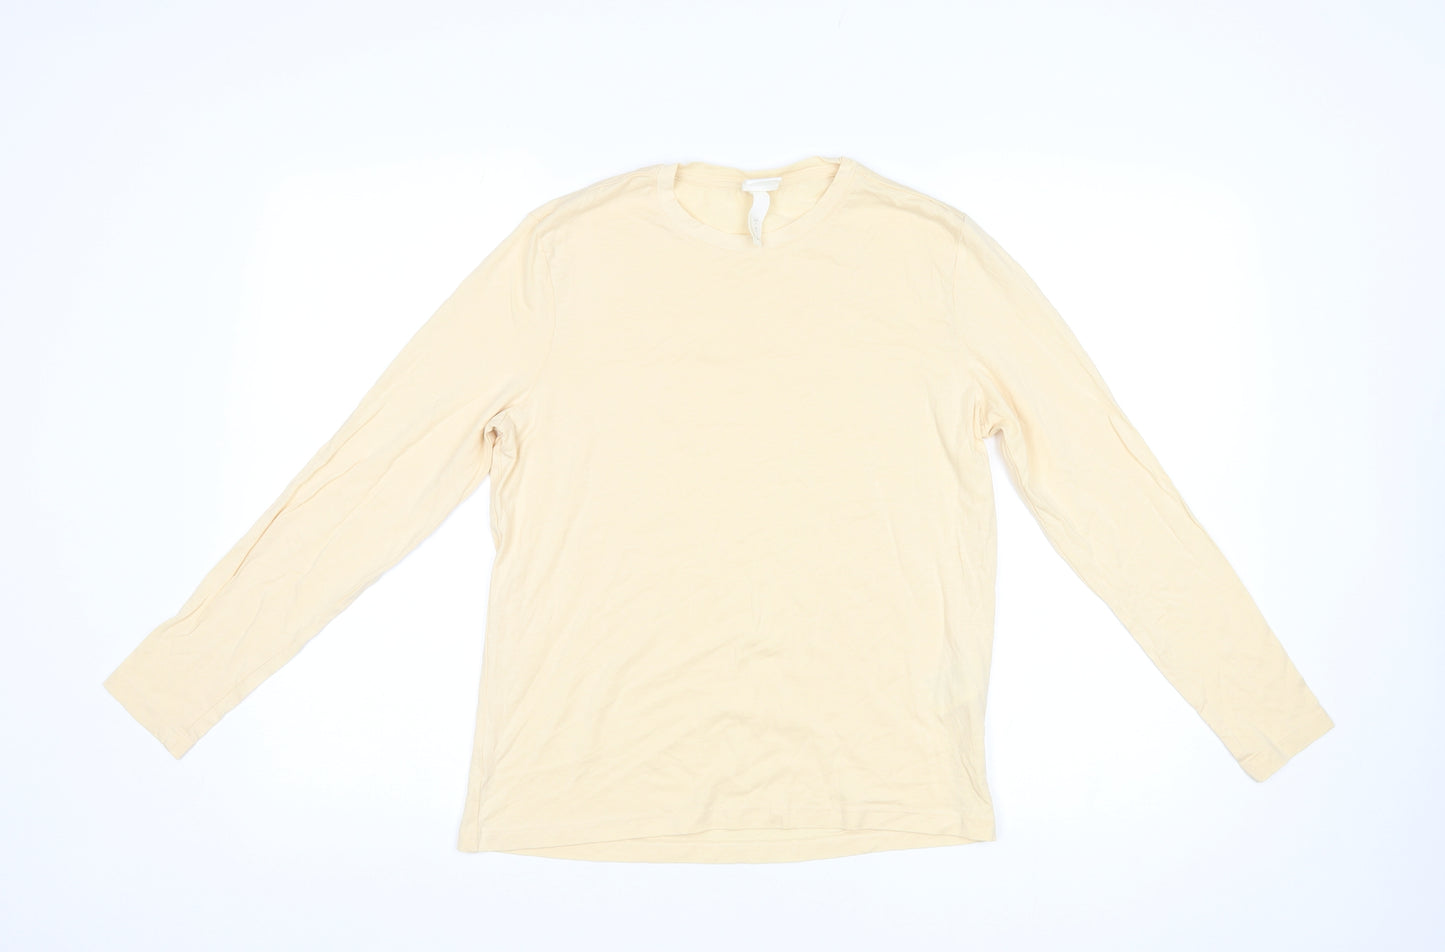 H&M Womens Yellow Cotton Basic T-Shirt Size S Round Neck